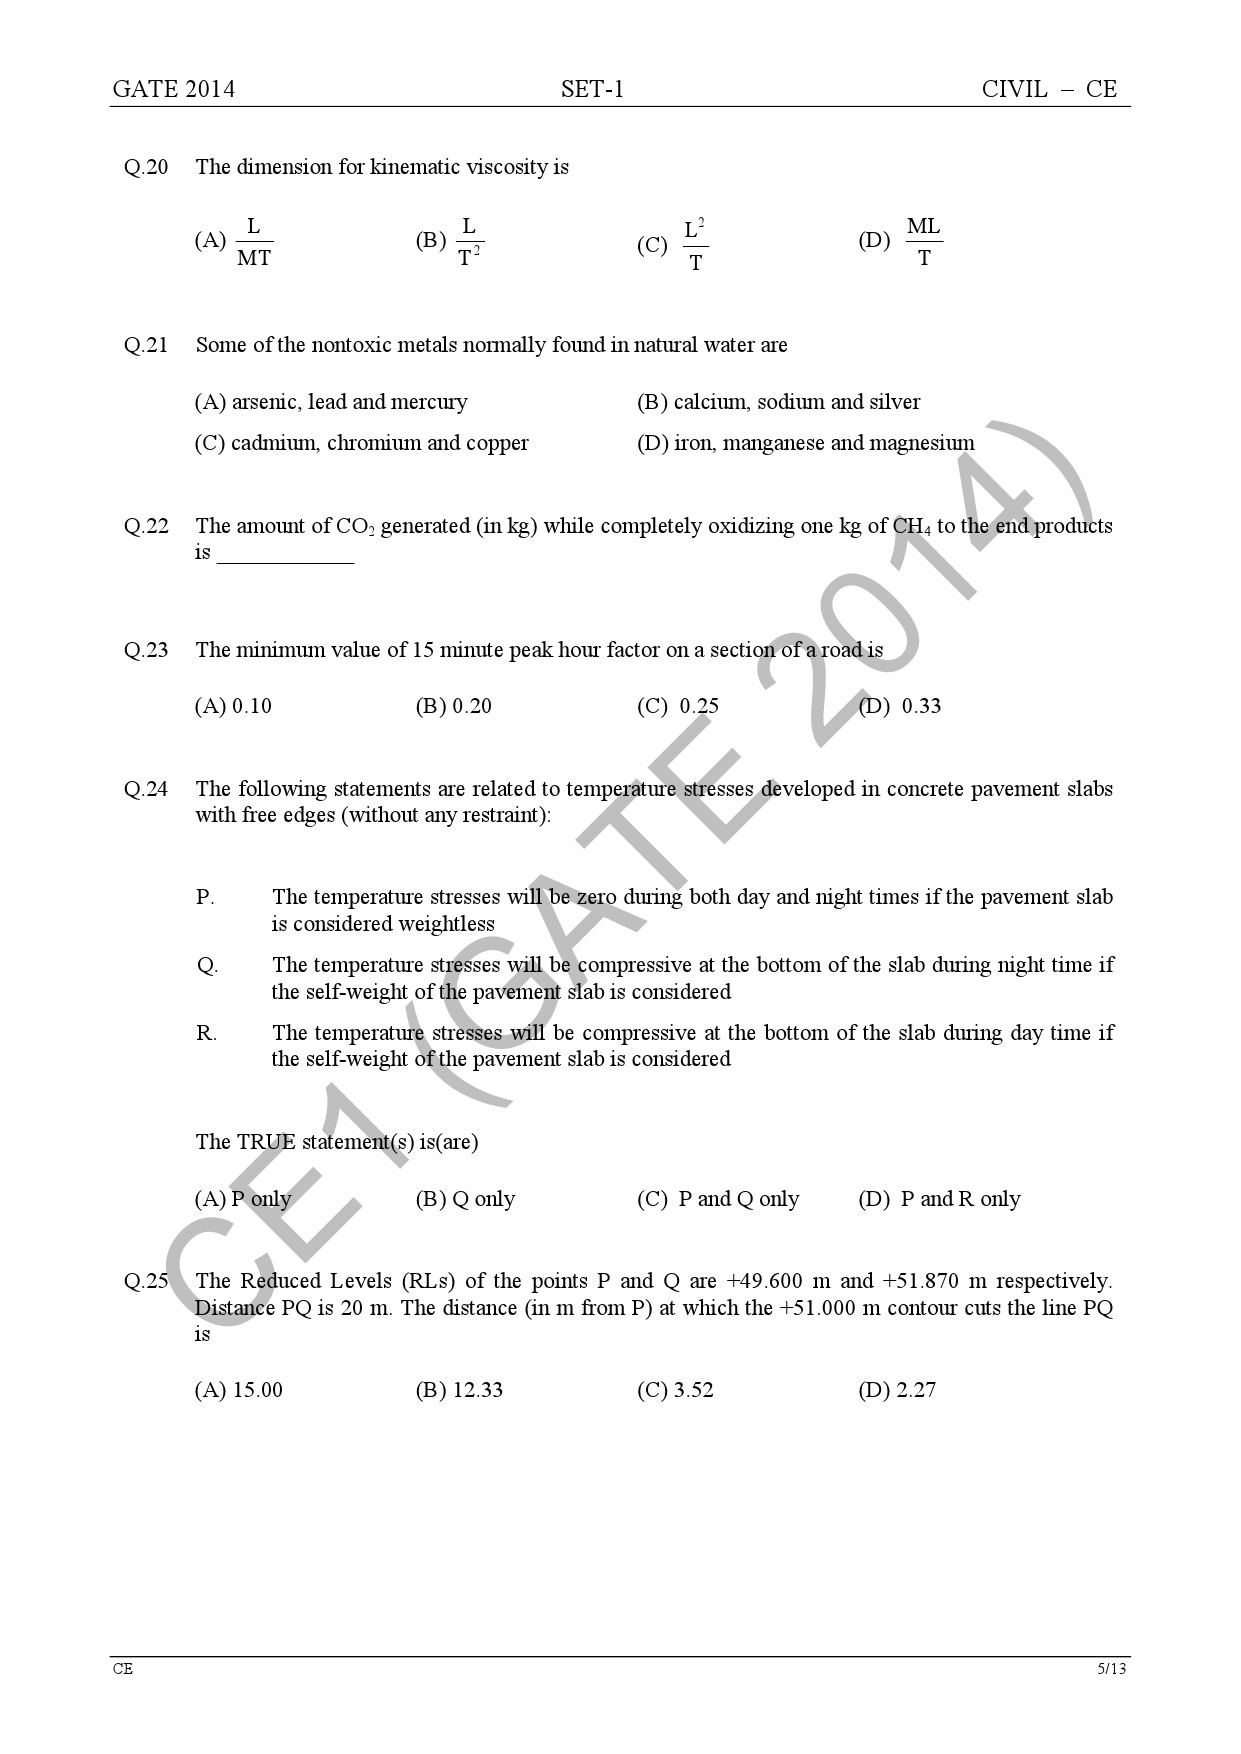 GATE Exam Question Paper 2014 Civil Engineering Set 1 11